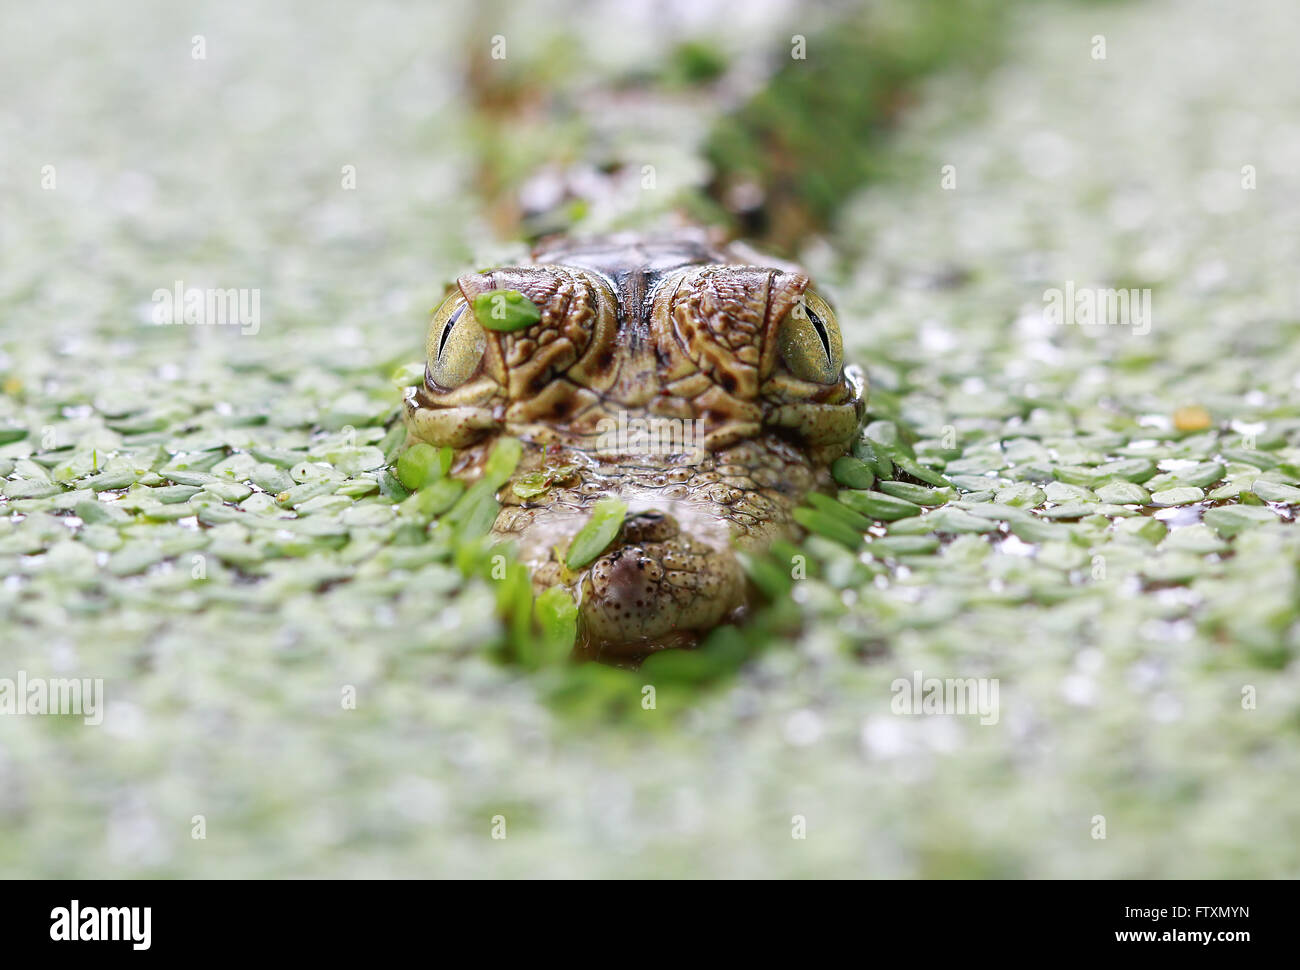 Baby crocodile in swamp, Indonesia Stock Photo